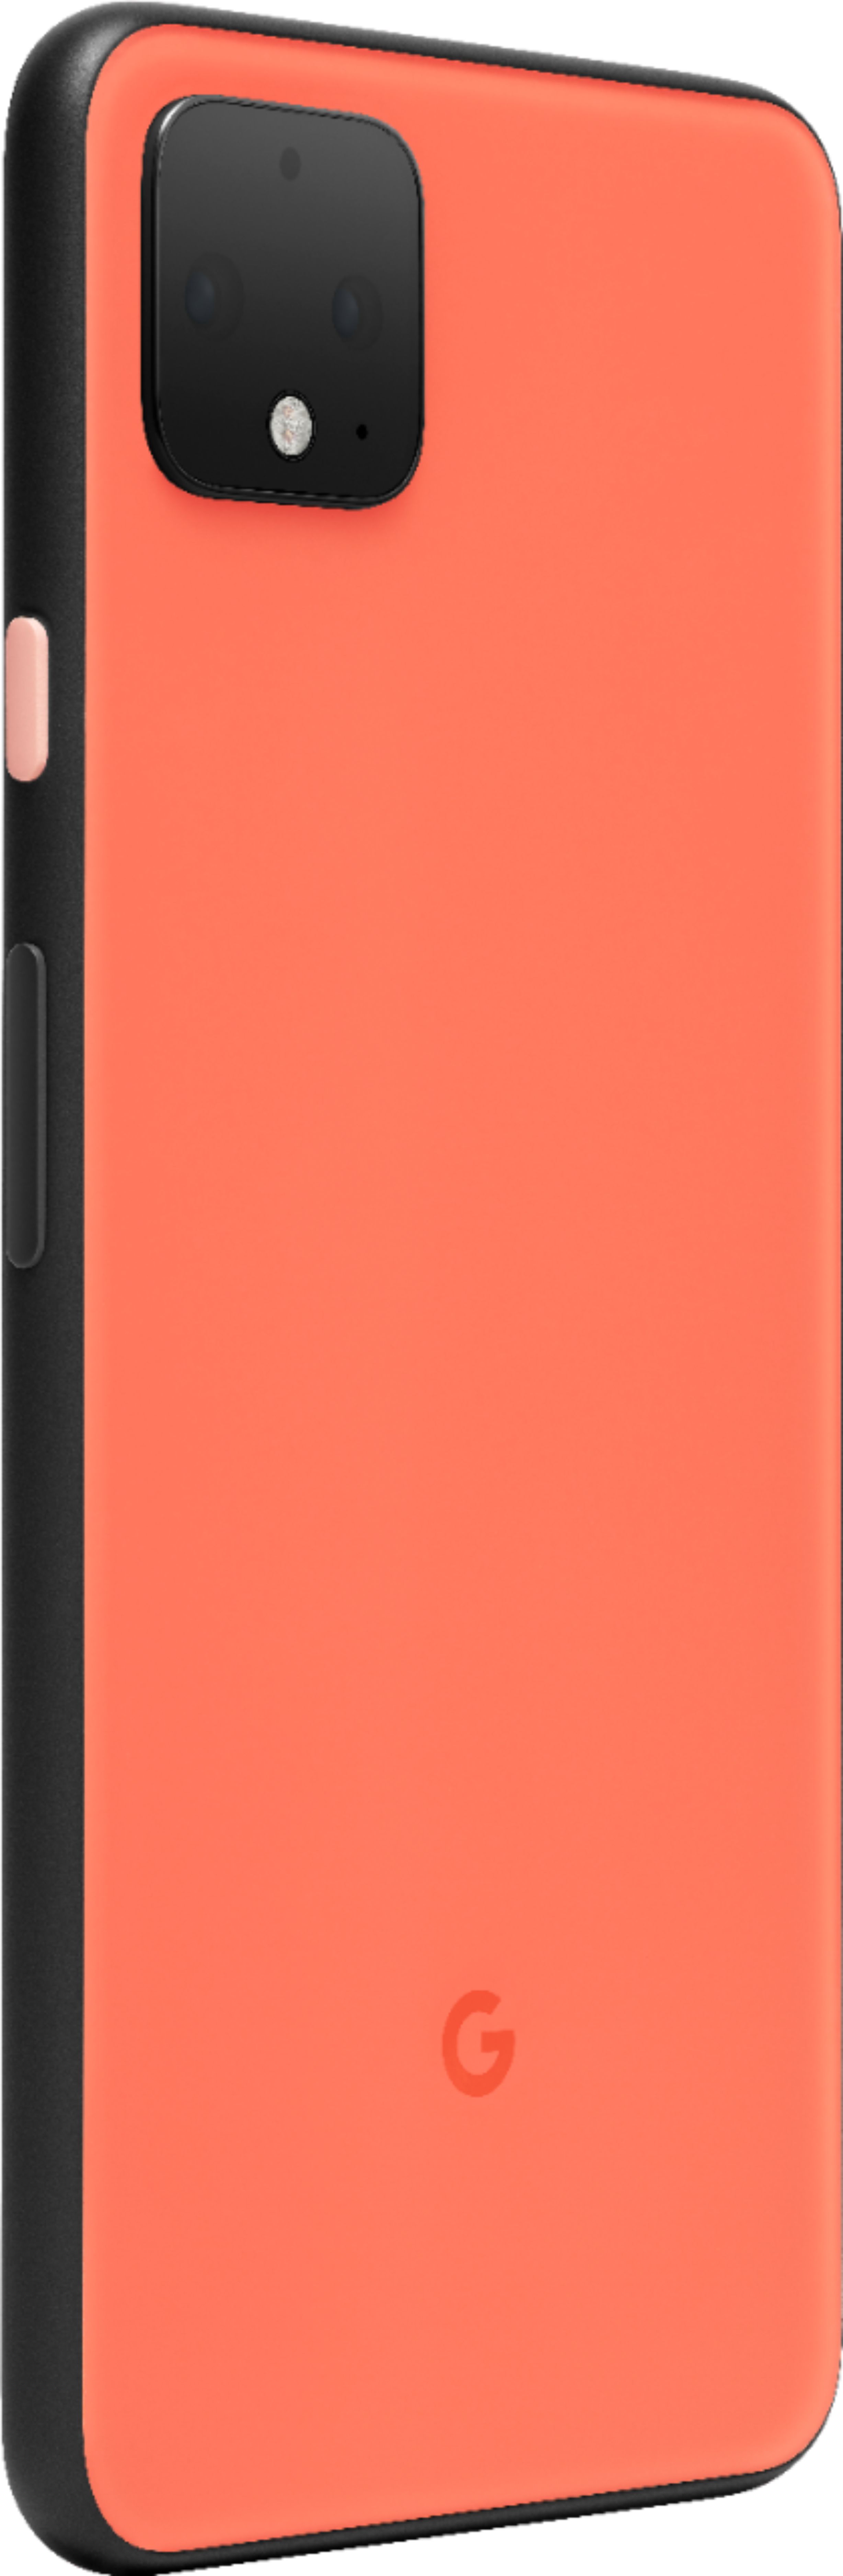 Best Buy: Google Pixel 4 XL 64GB Oh So Orange (Verizon) GA01208-US